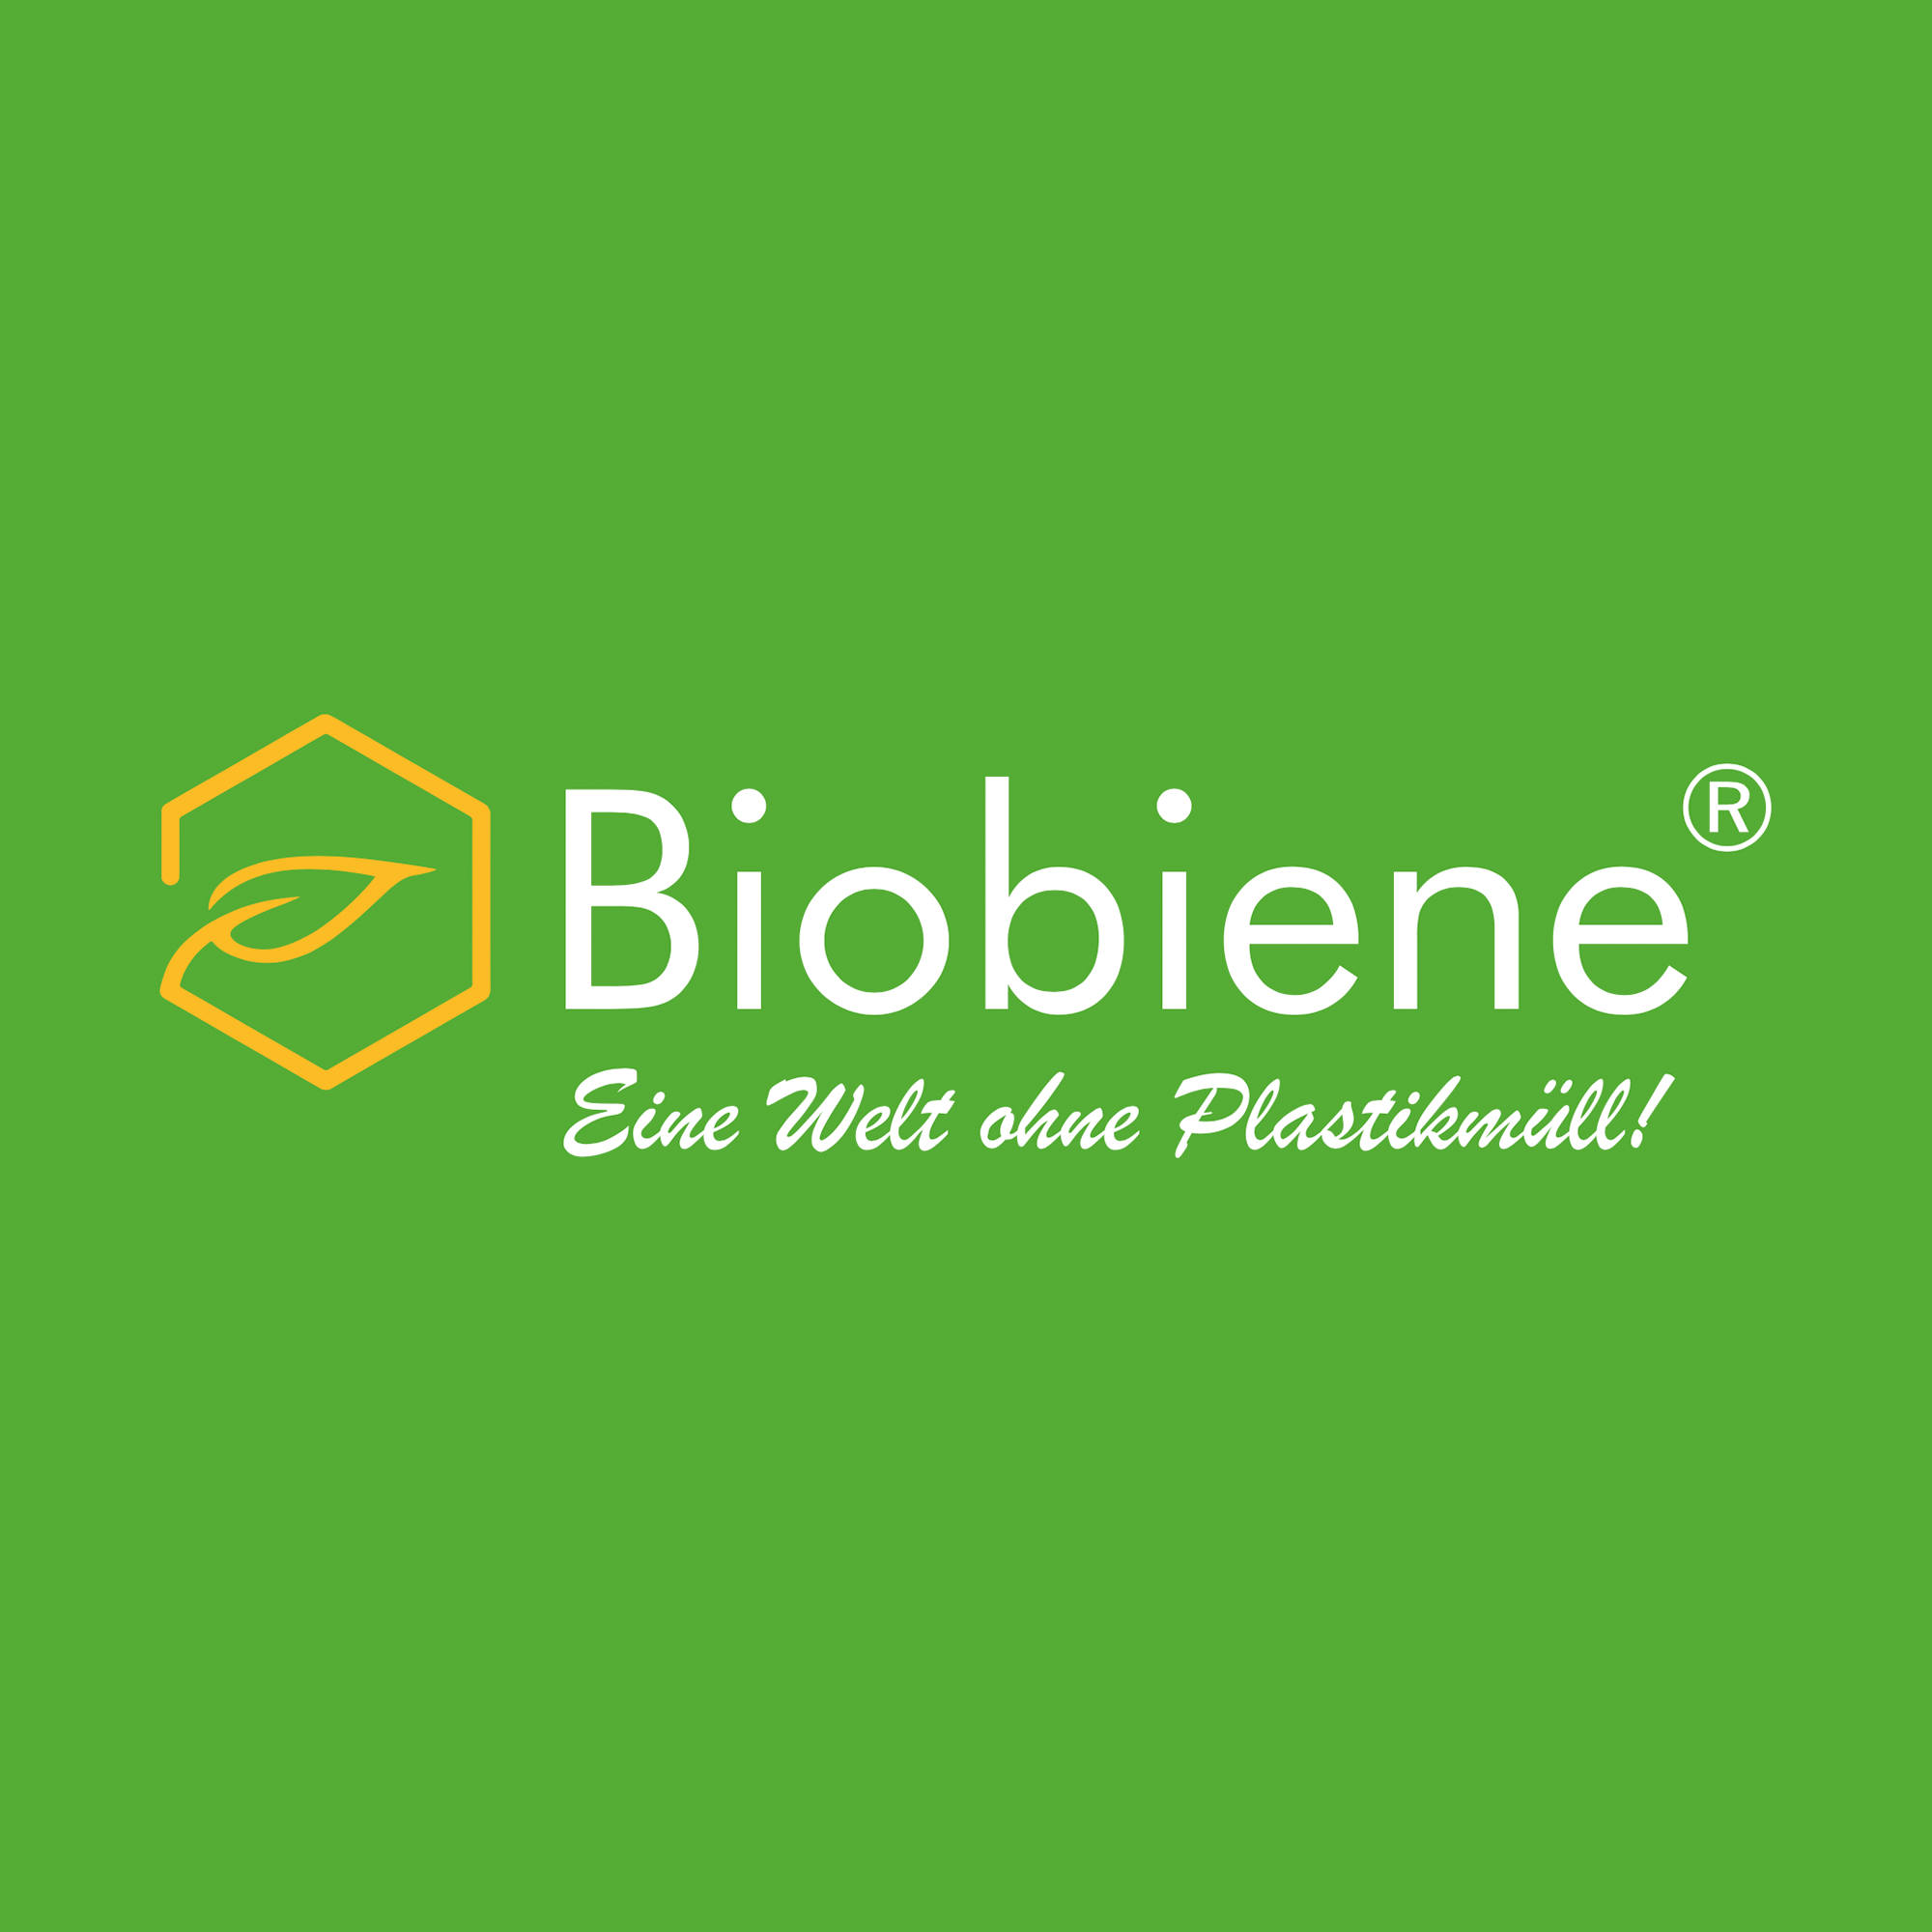 Biobiene-Onlineshop